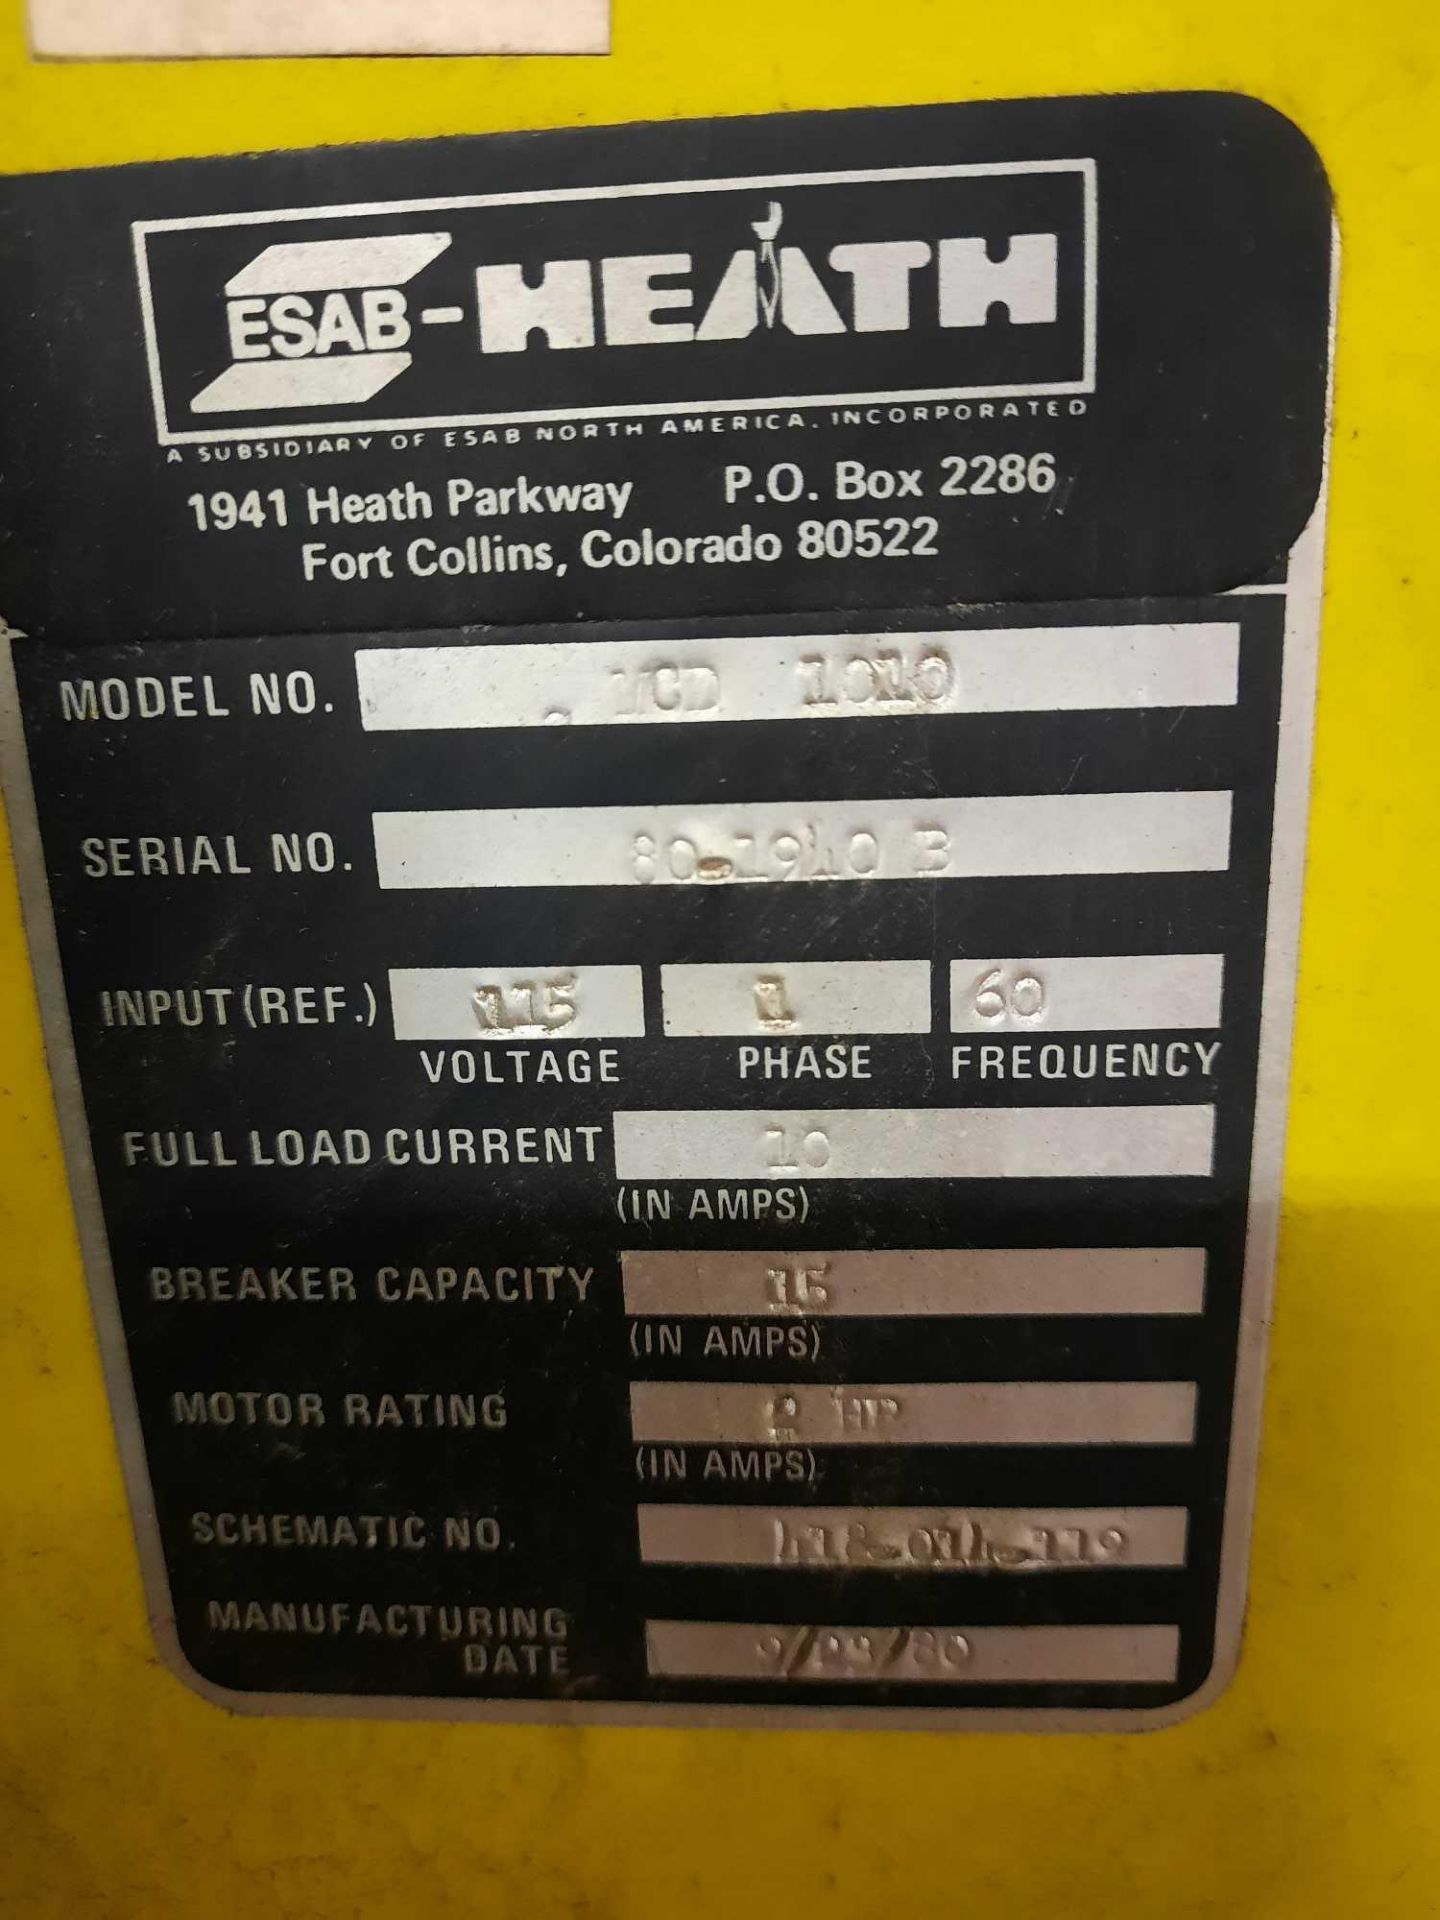 ESAB Heath shape cutter, model 10D-1010, serial 80-1940B, 120 x 60 inch tracing table, 144 x 84 - Image 2 of 18